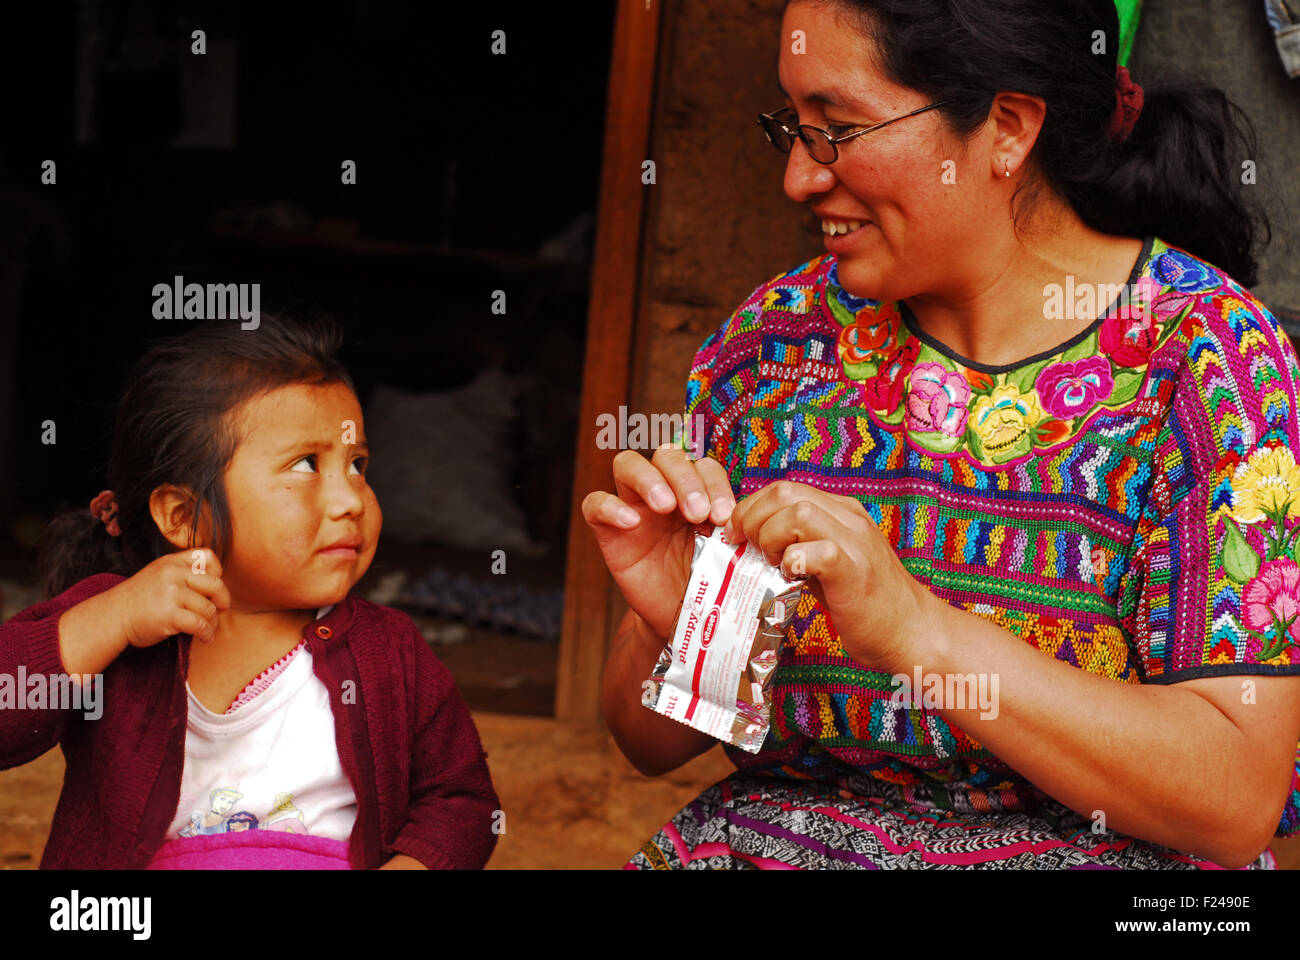 Guatemala, San Bartolo, nurse (Faustina vicenta vasquez Vasquez 34 years) opening plumpy nut pack for little indigenous girl (Orbelina Nataly Sontay Ramirez 3) Stock Photo